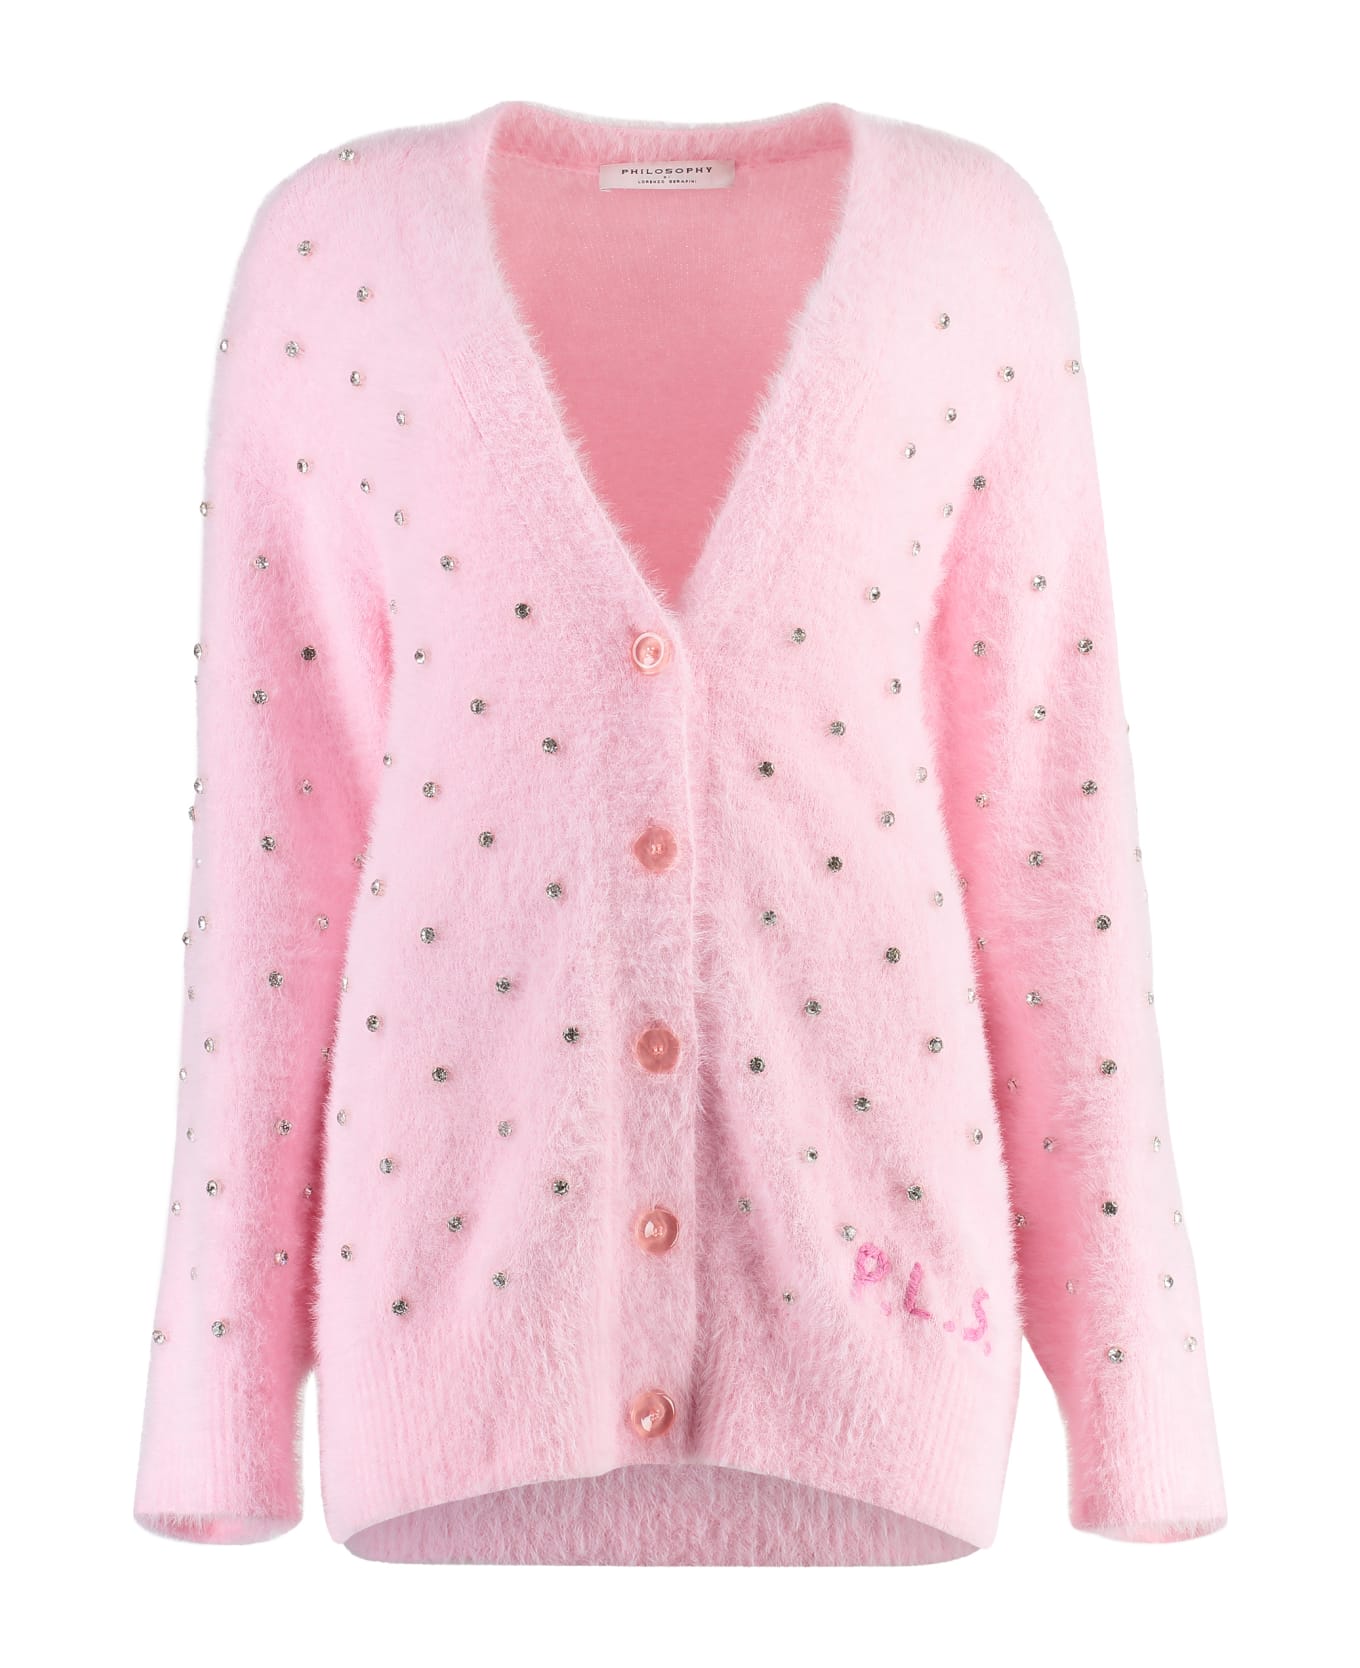 Philosophy di Lorenzo Serafini Rhinestones Knitted Cardigan - Pink